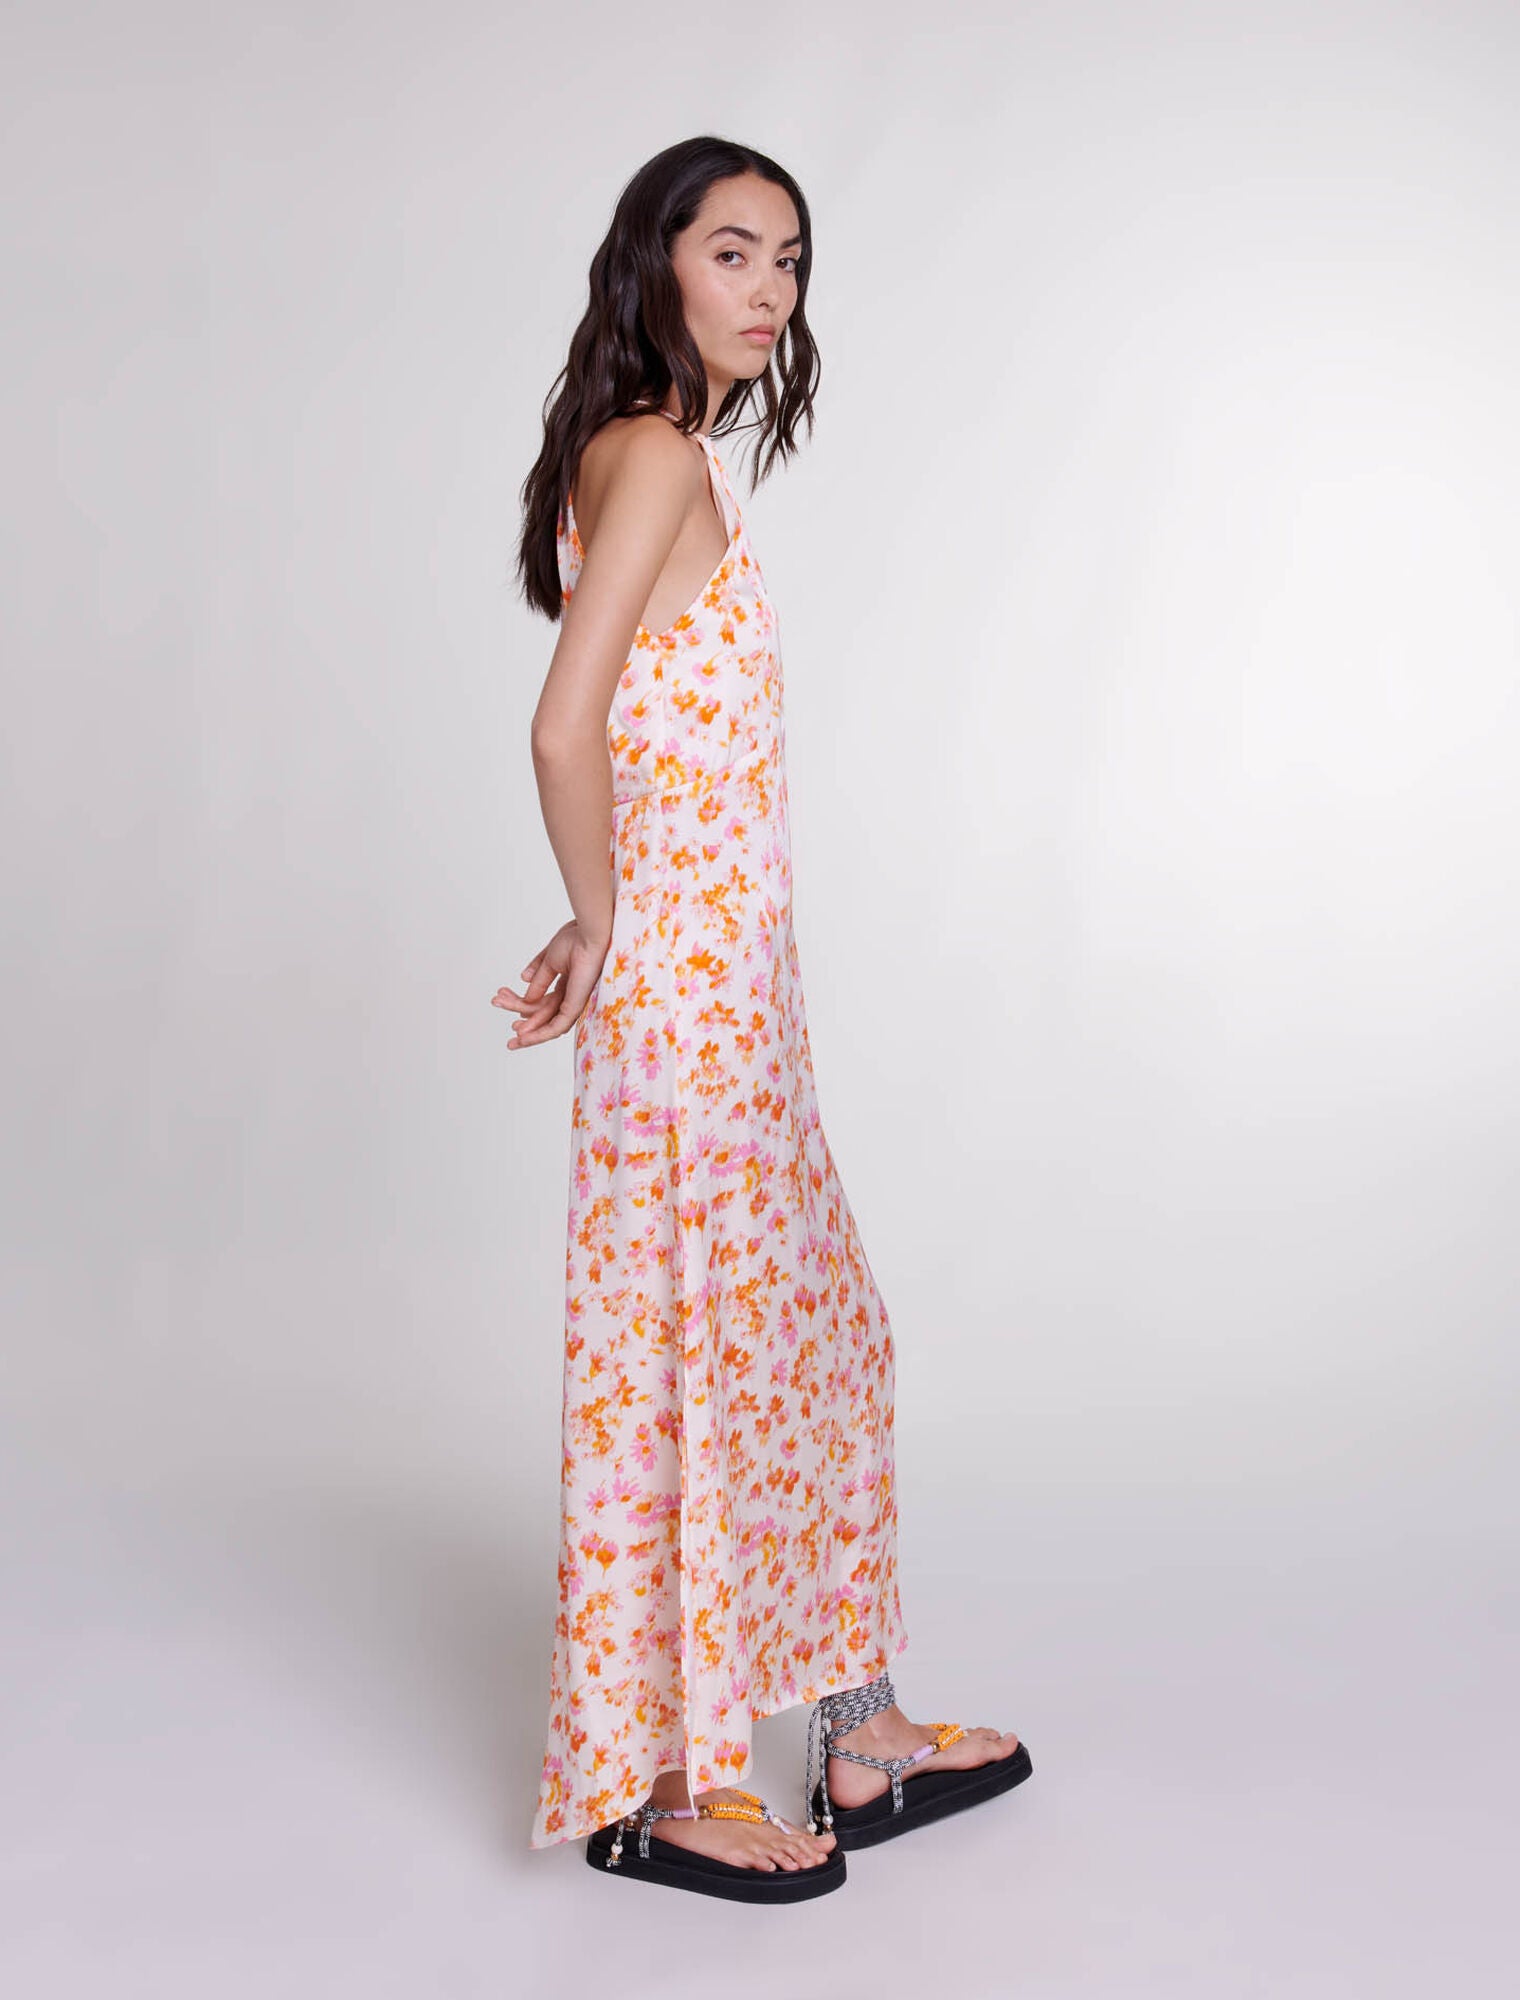 Sping Orange Flower Print-Floral satin-effect maxi dress